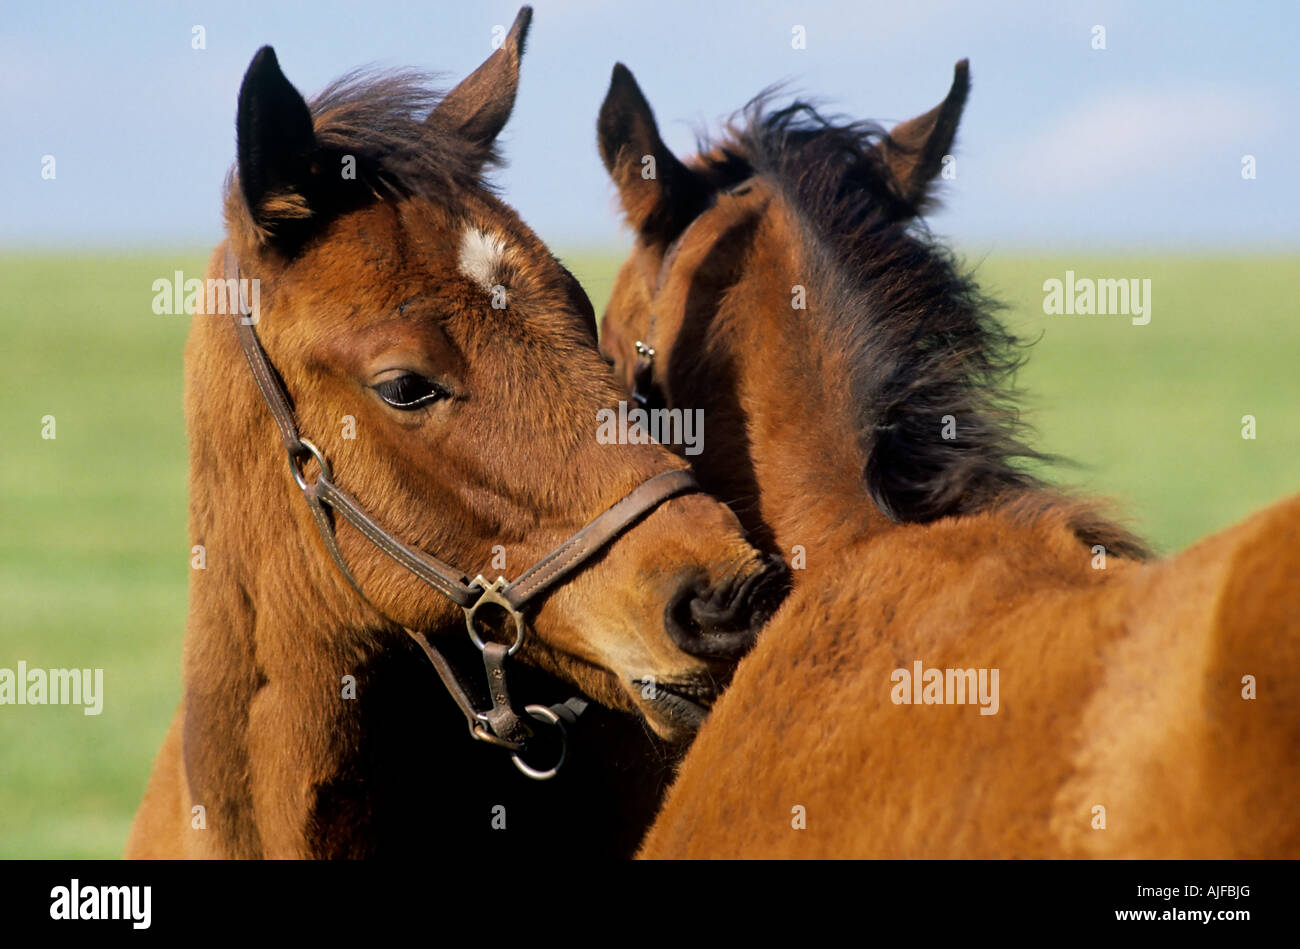 Two horses Stock Photo